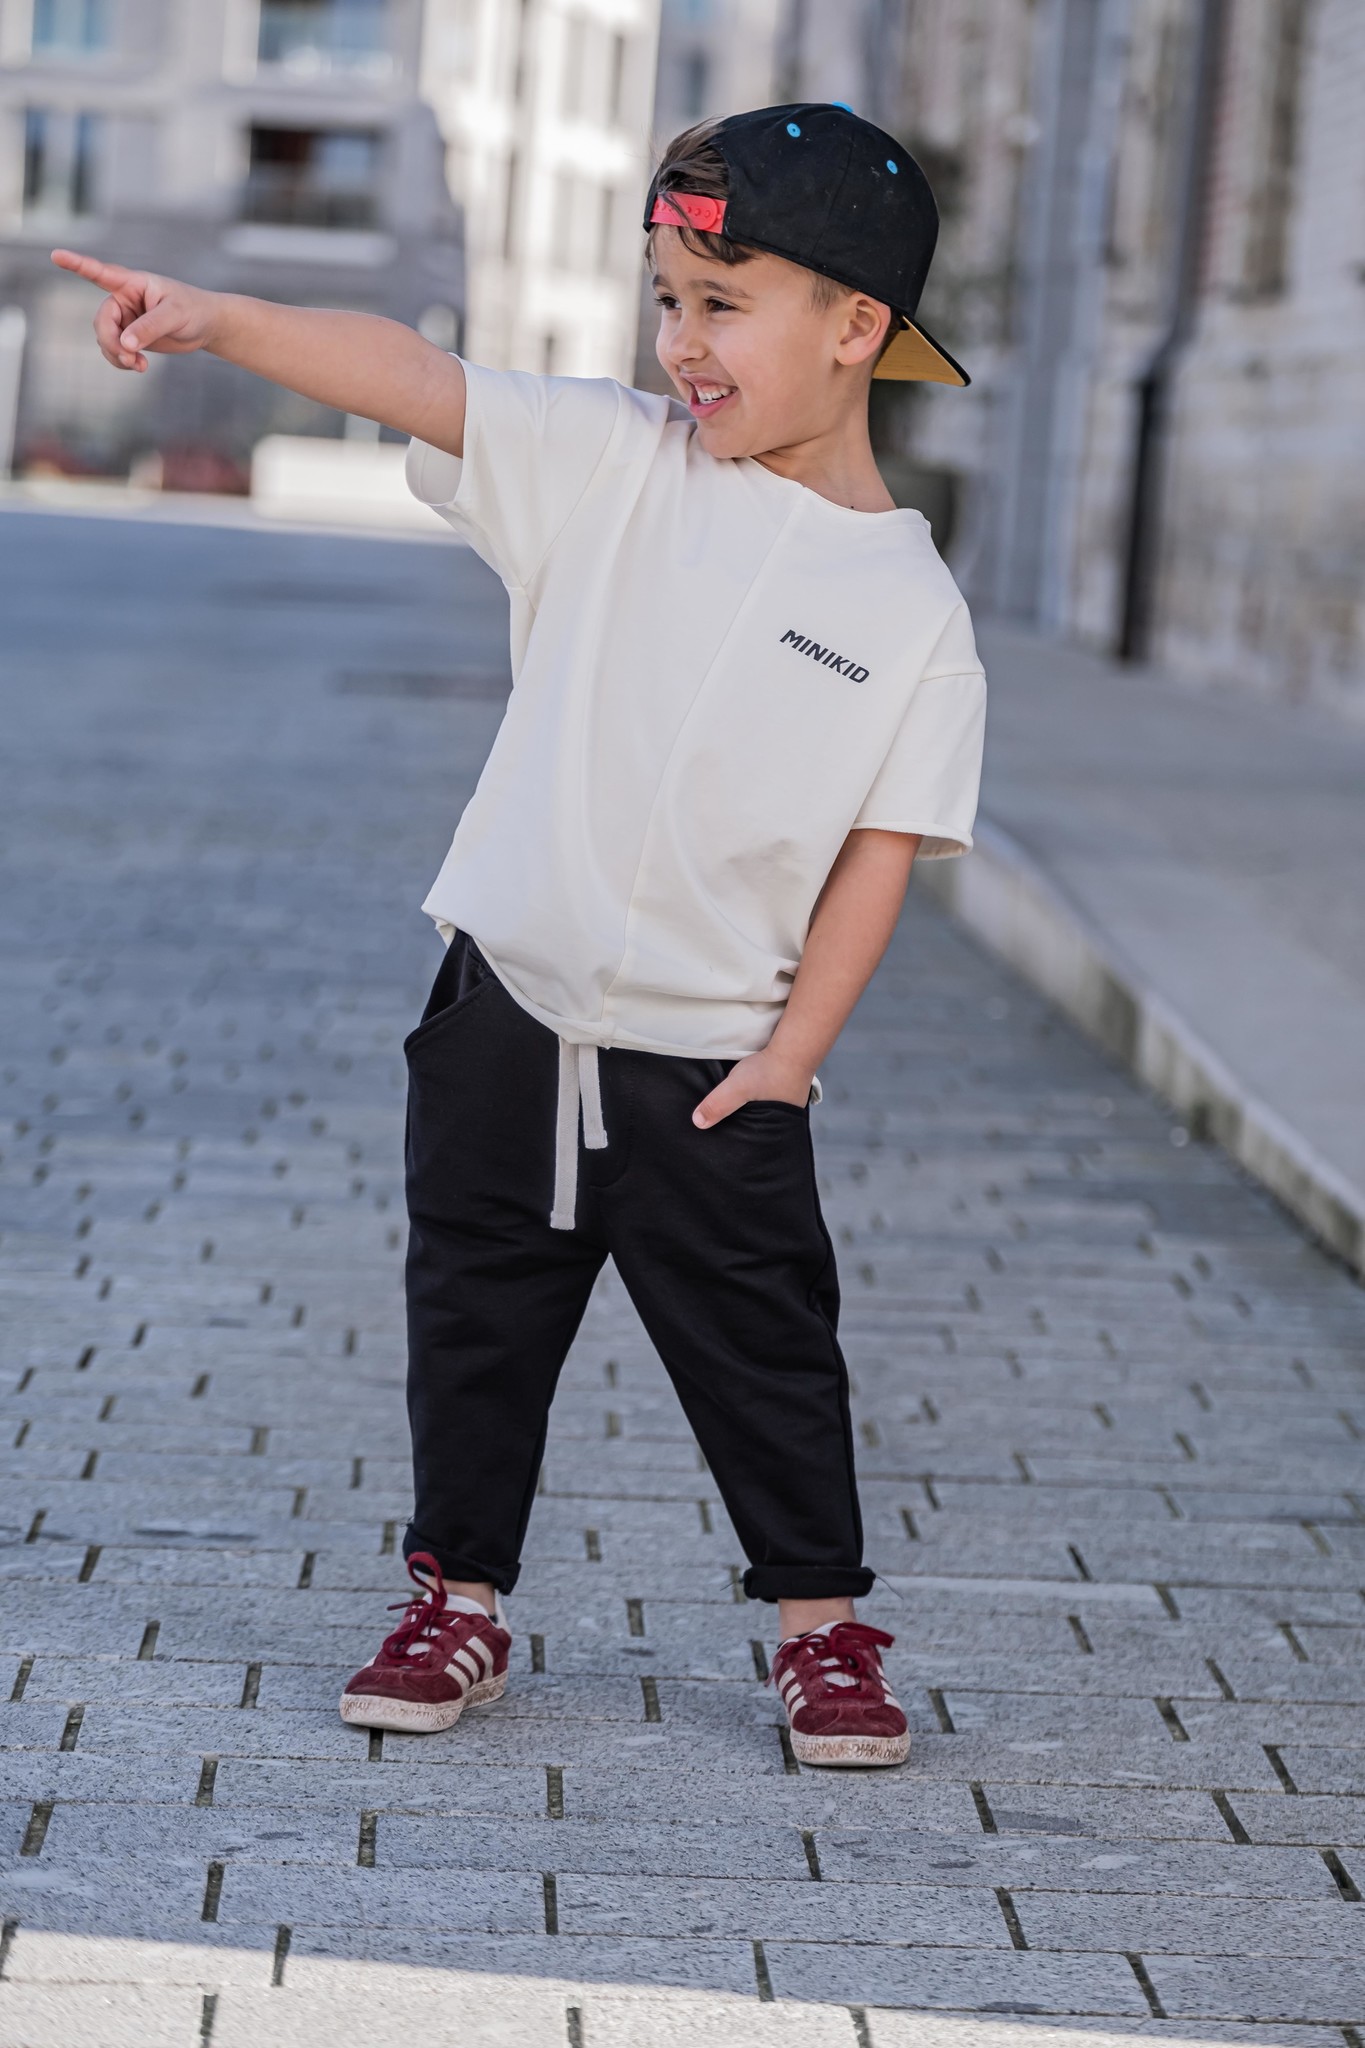 Minikid WHITE BOYS T-SHIRT | STREETSTYLE CHILDREN'S CLOTHING | MINIKID